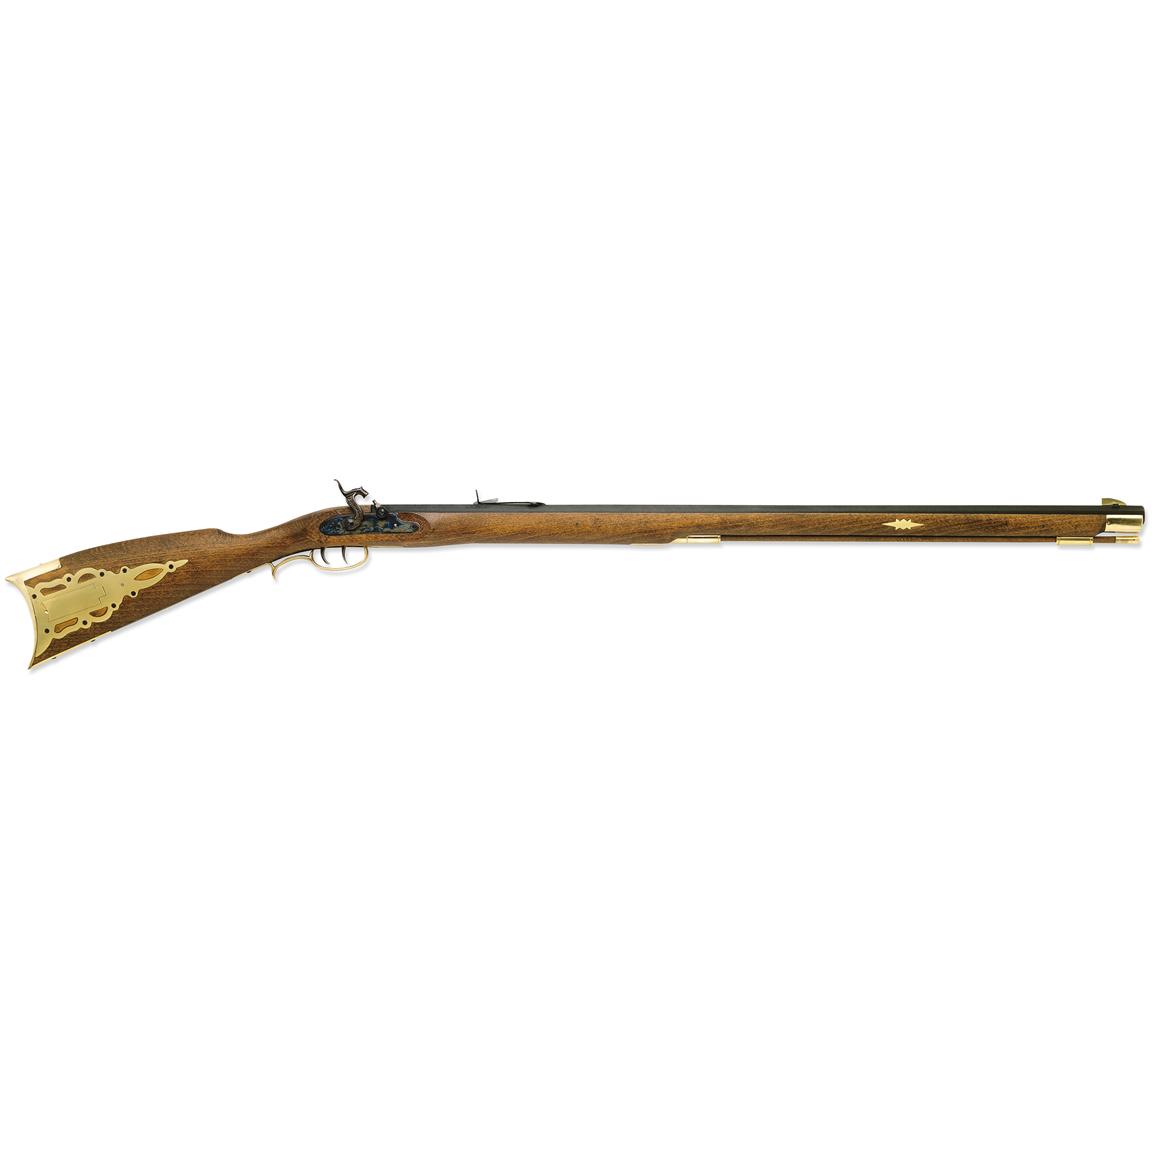 Traditions Shenandoah Flintlock rifle